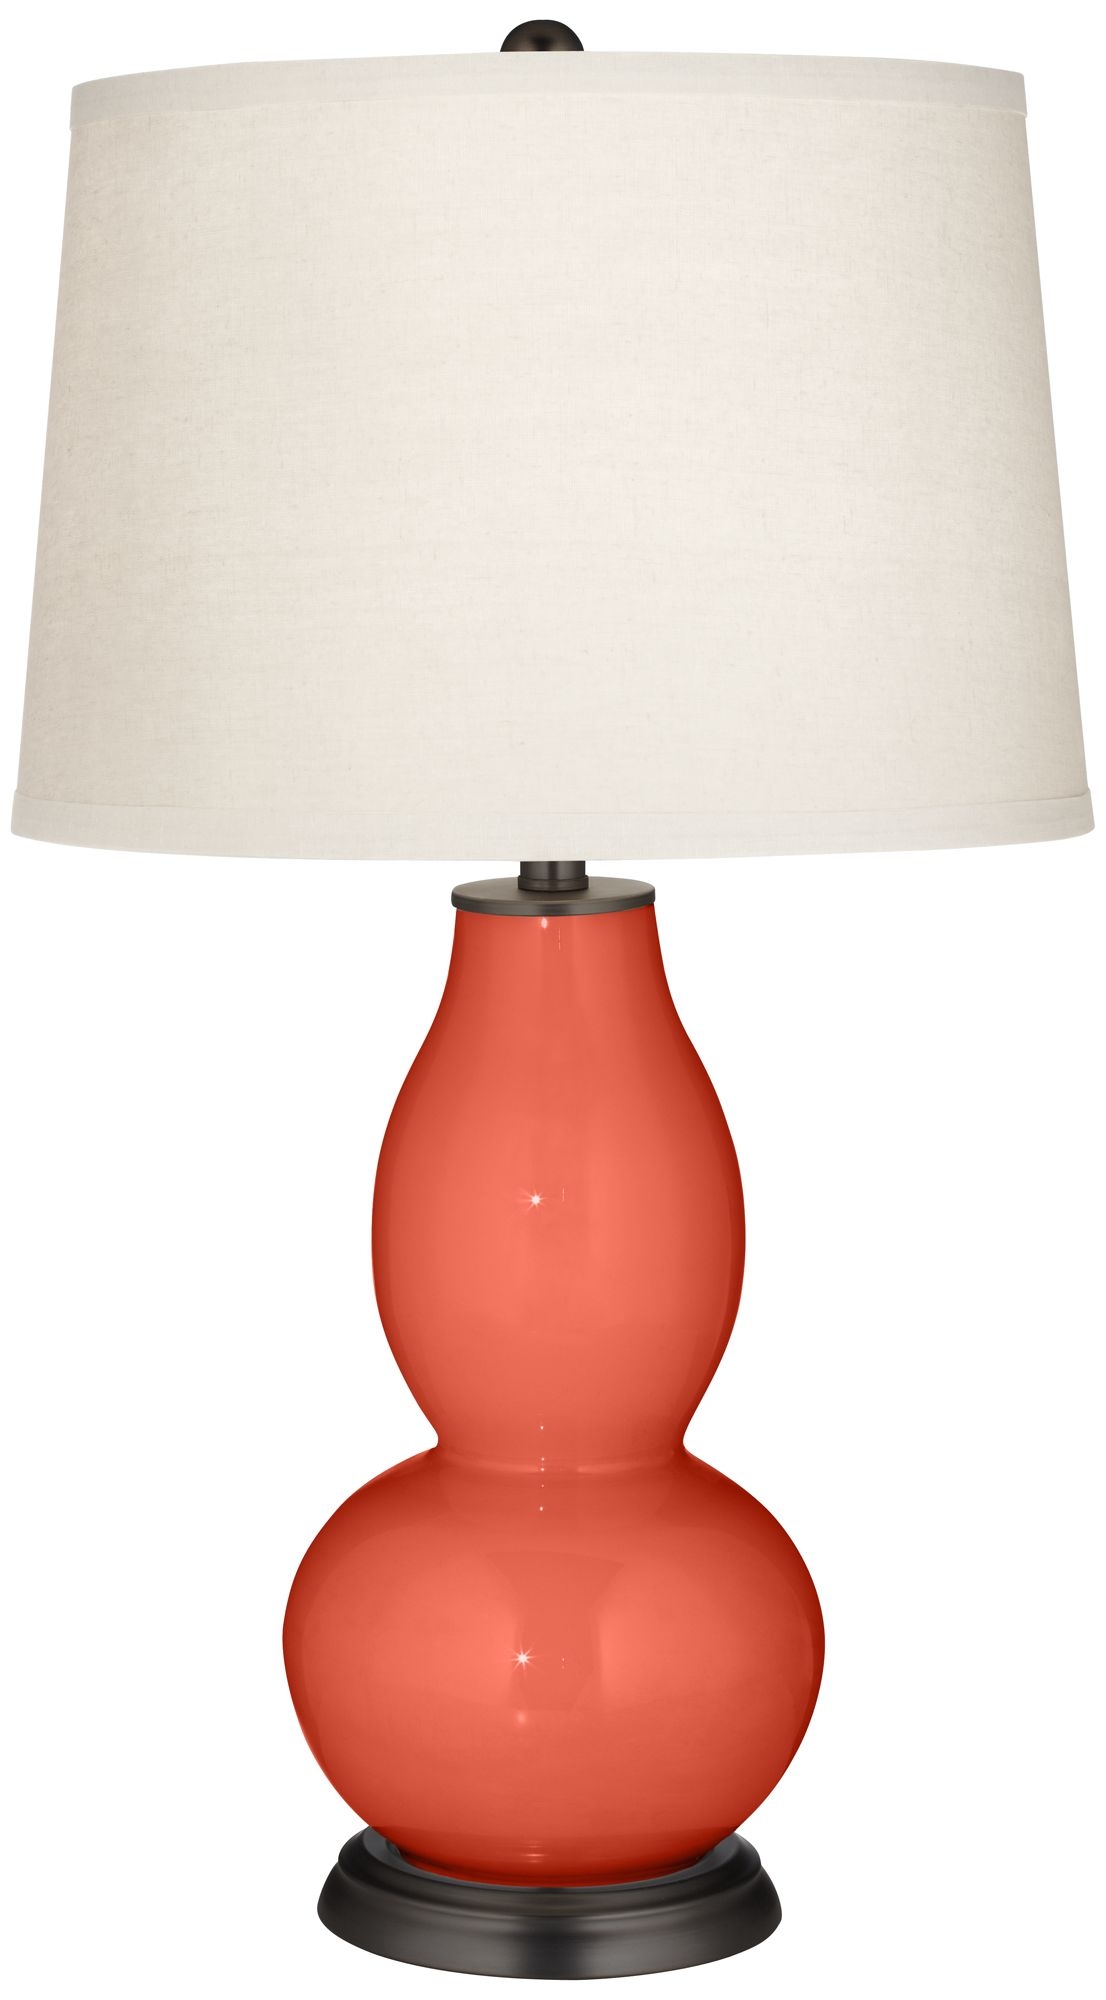 Koi Double Gourd Table Lamp - Image 0